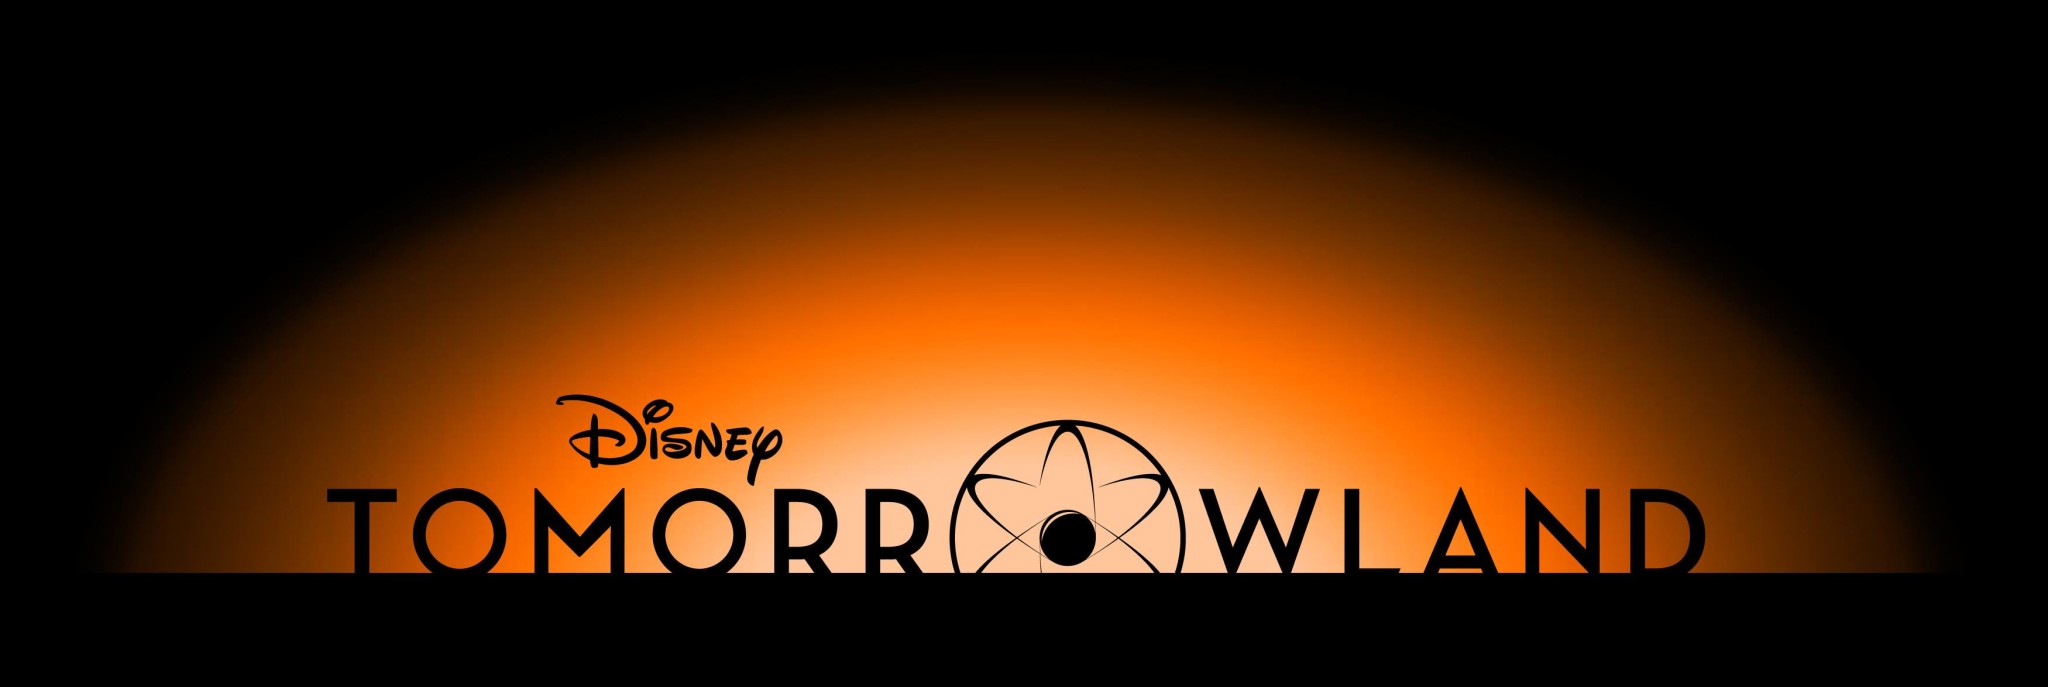 Disney Movie Tomorrowland will be Filming in Orlando